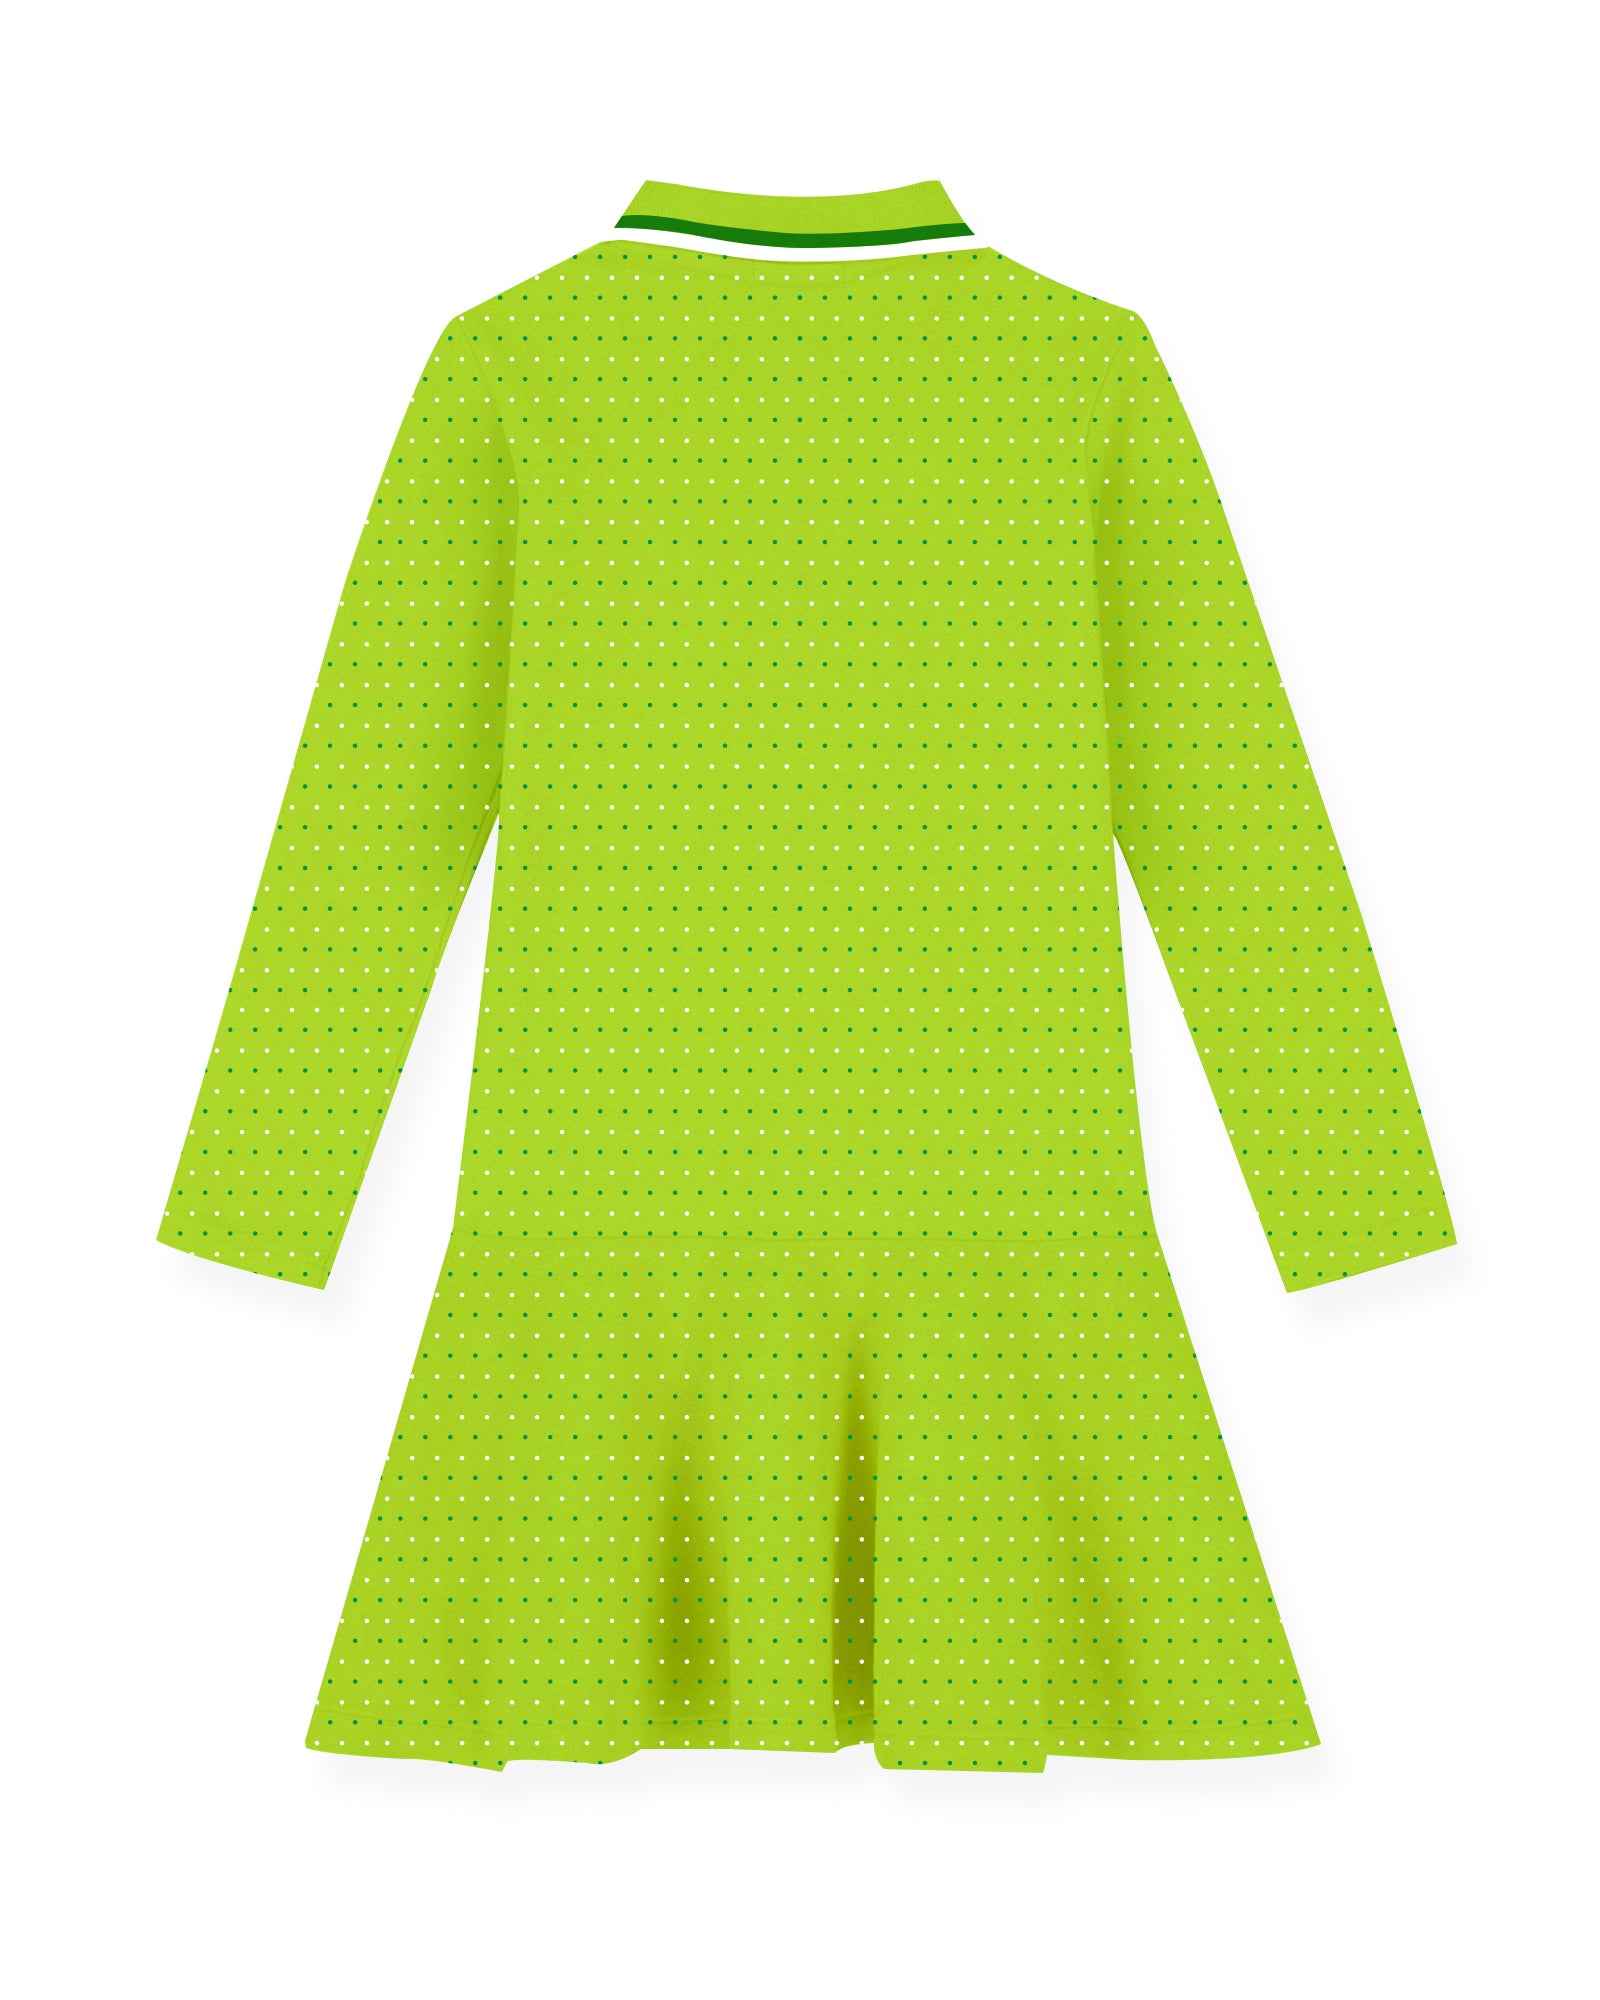 Girls Dots Printed Polo Dress